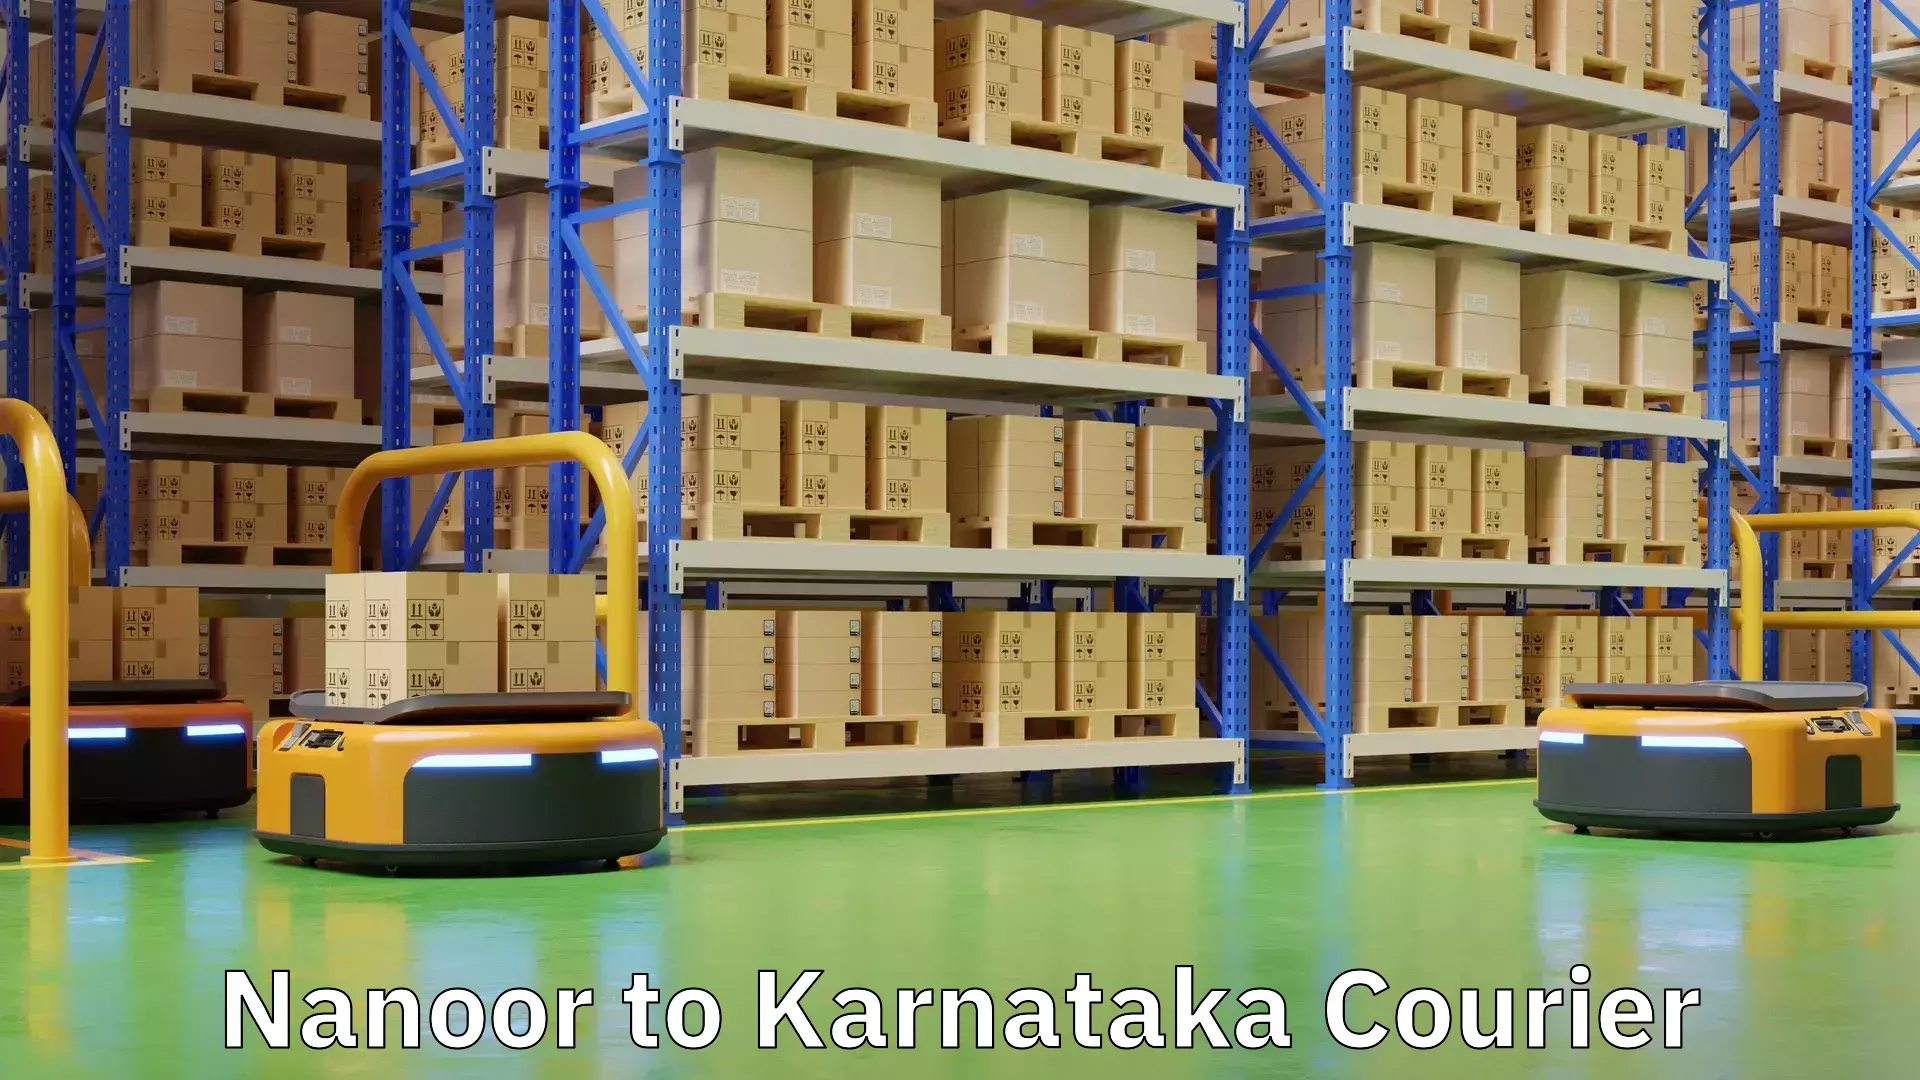 Package delivery network Nanoor to Karnataka